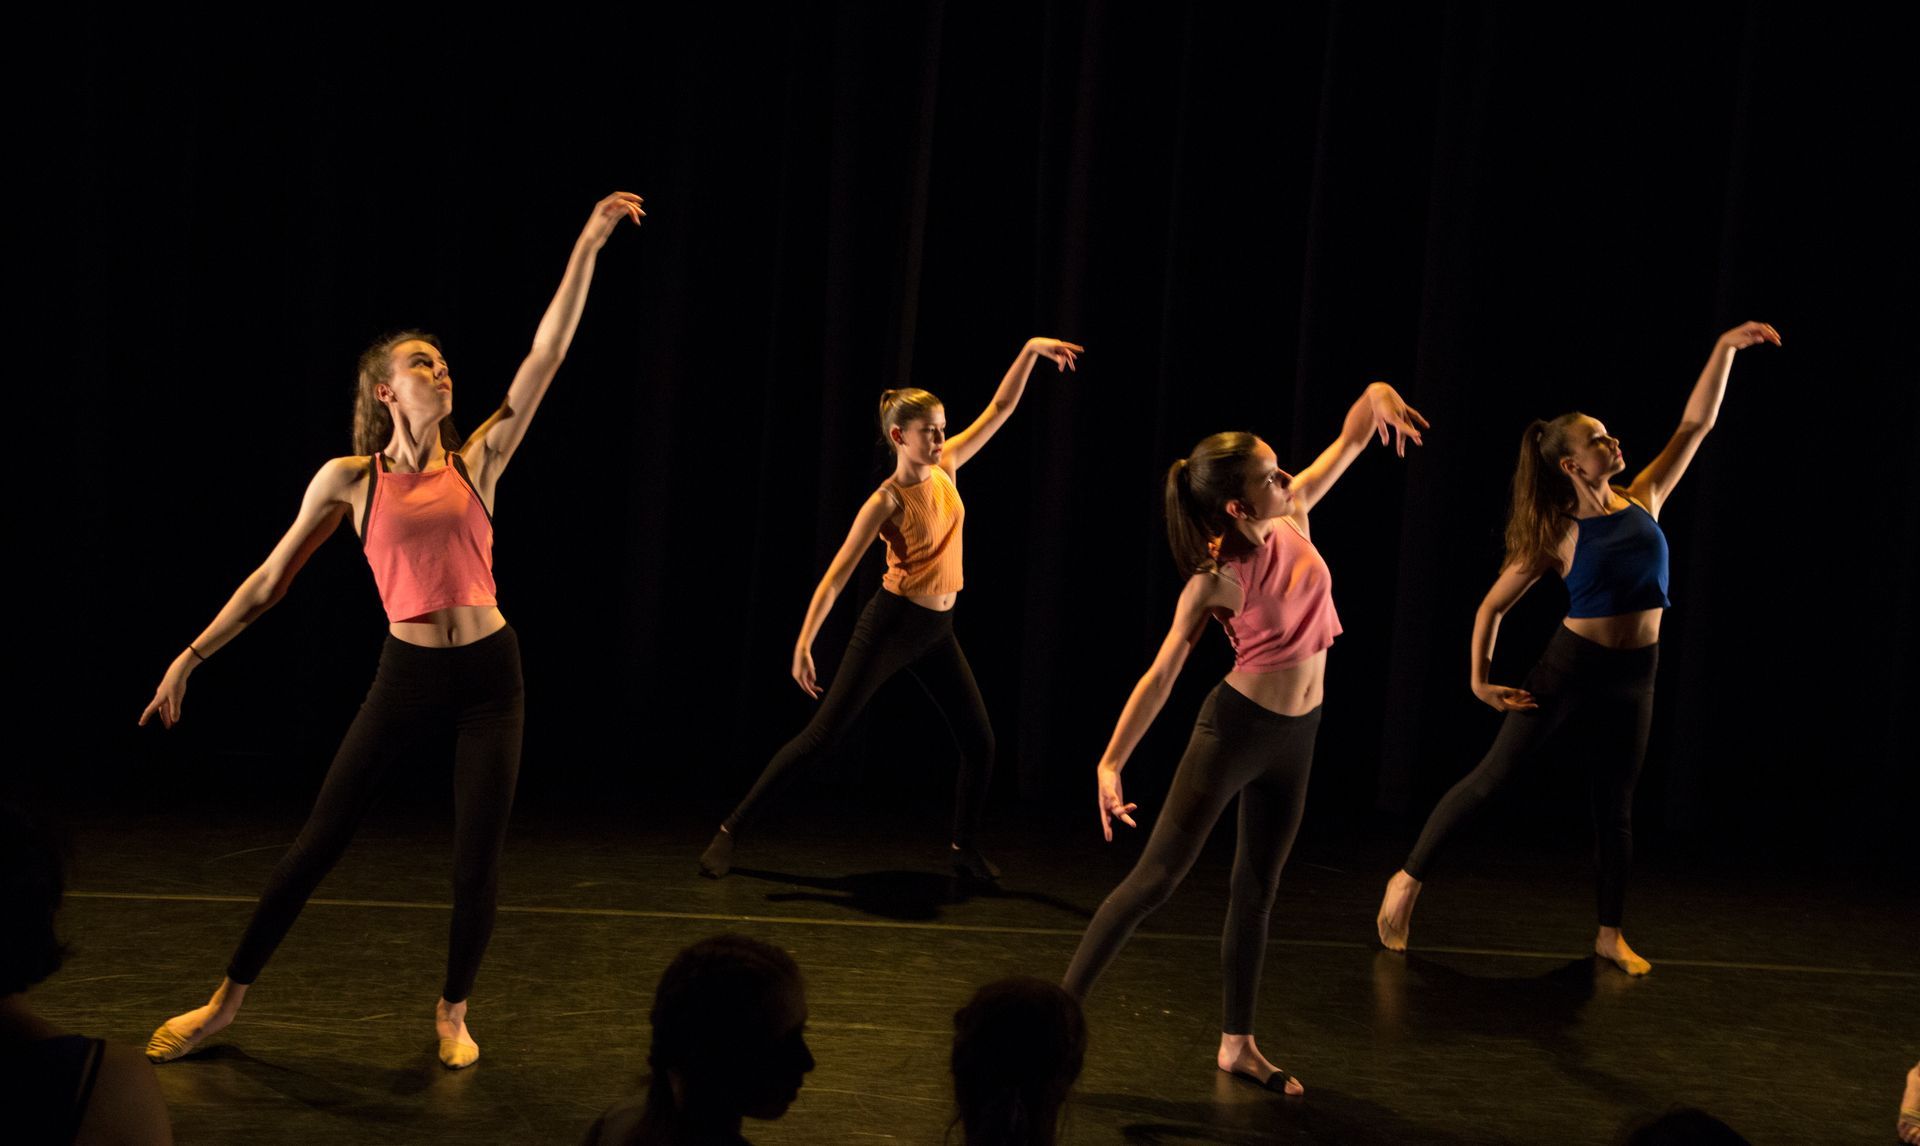 Elegant teenage dancers showcasing expressive contemporary choreography at public performance